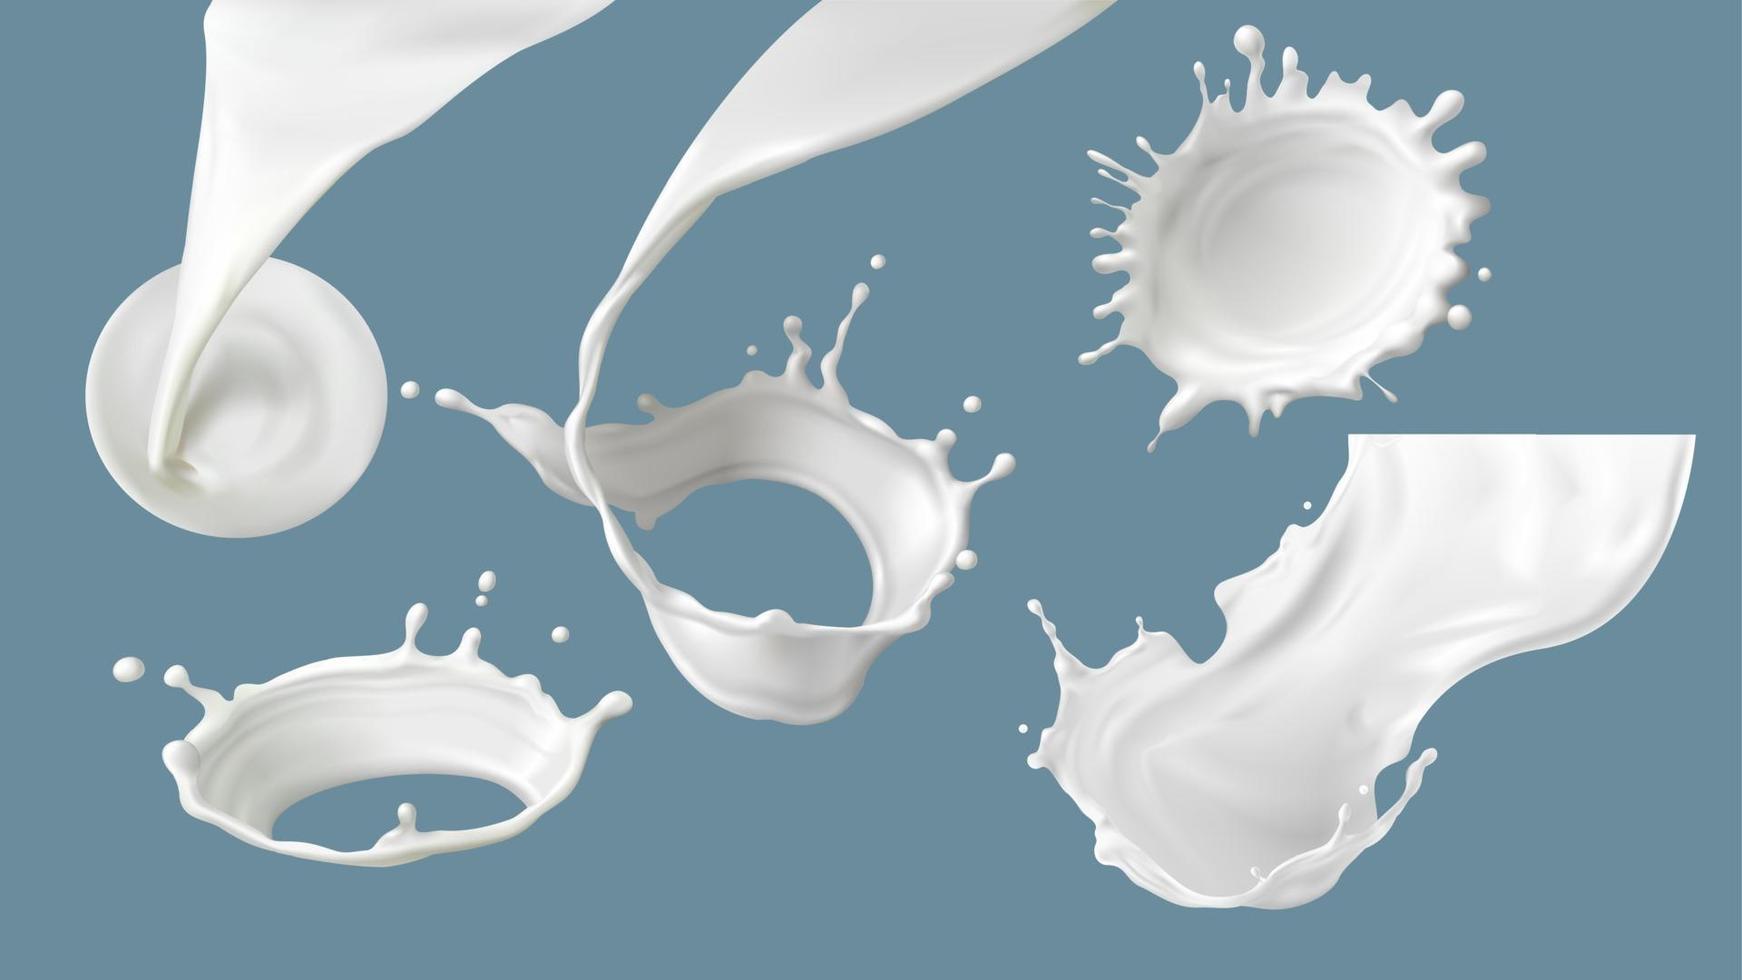 Milk splash or pouring realistic vector